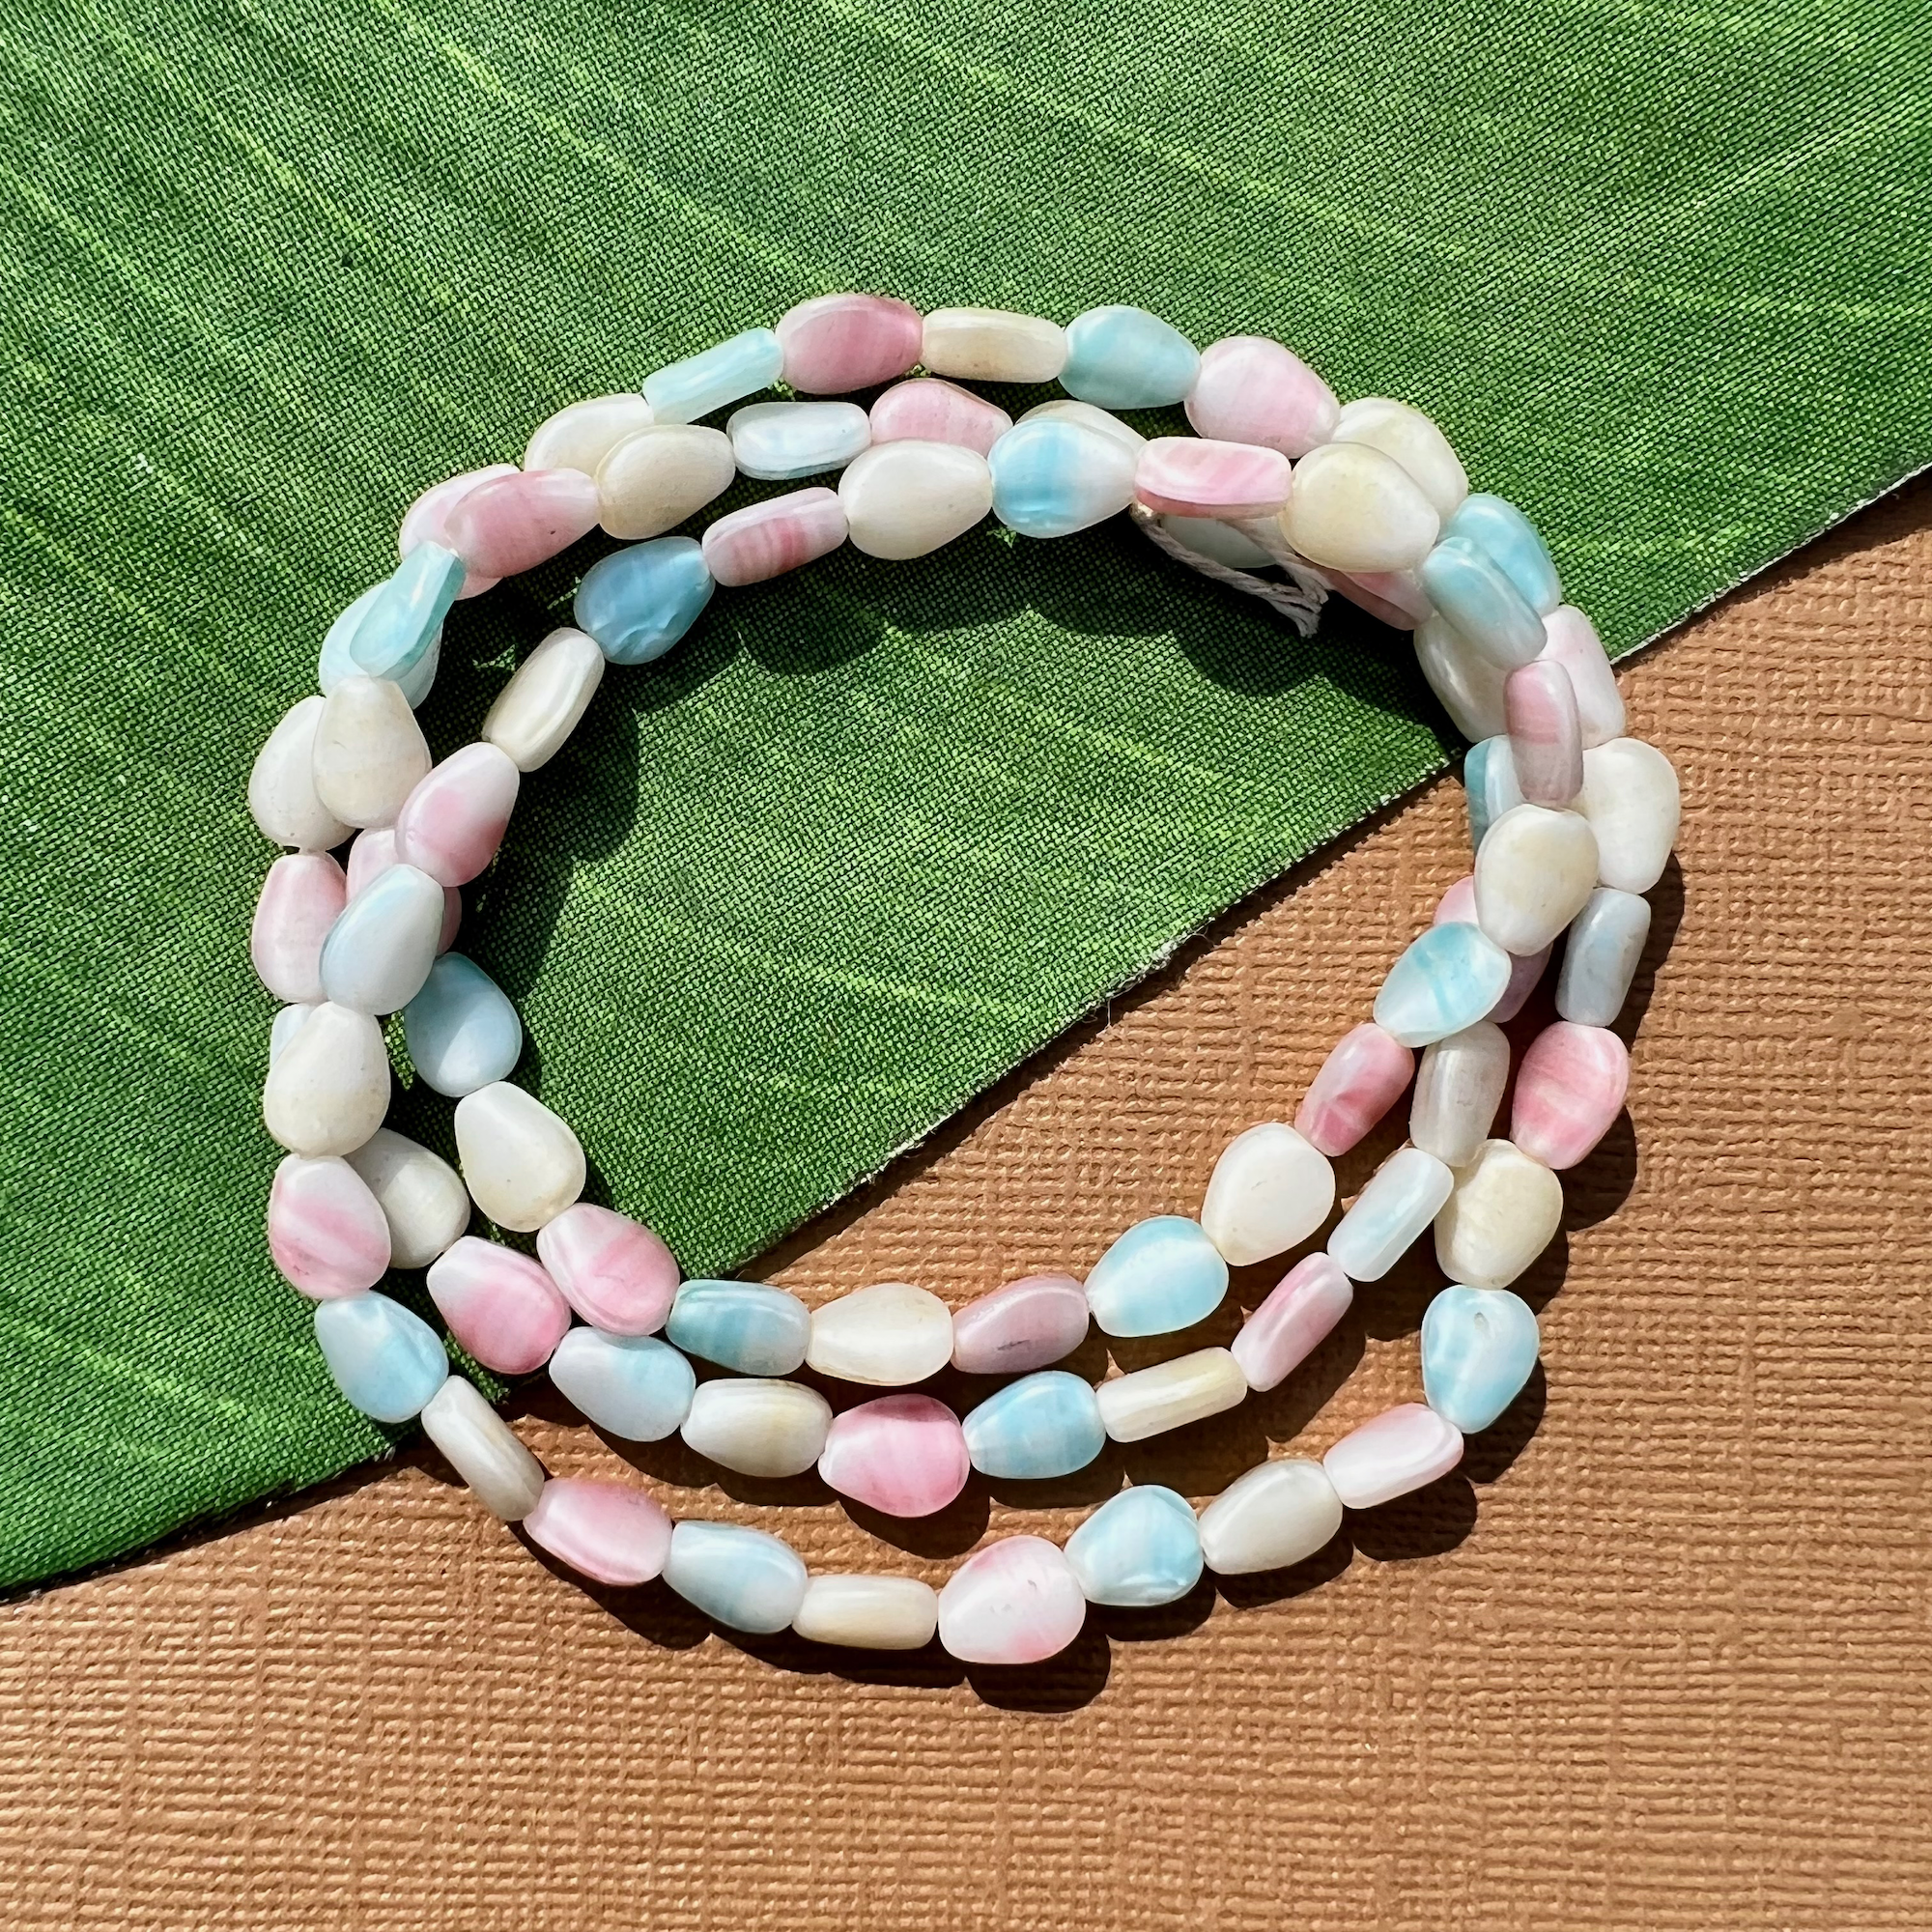 Pastel Drop Beads - 75 Pieces